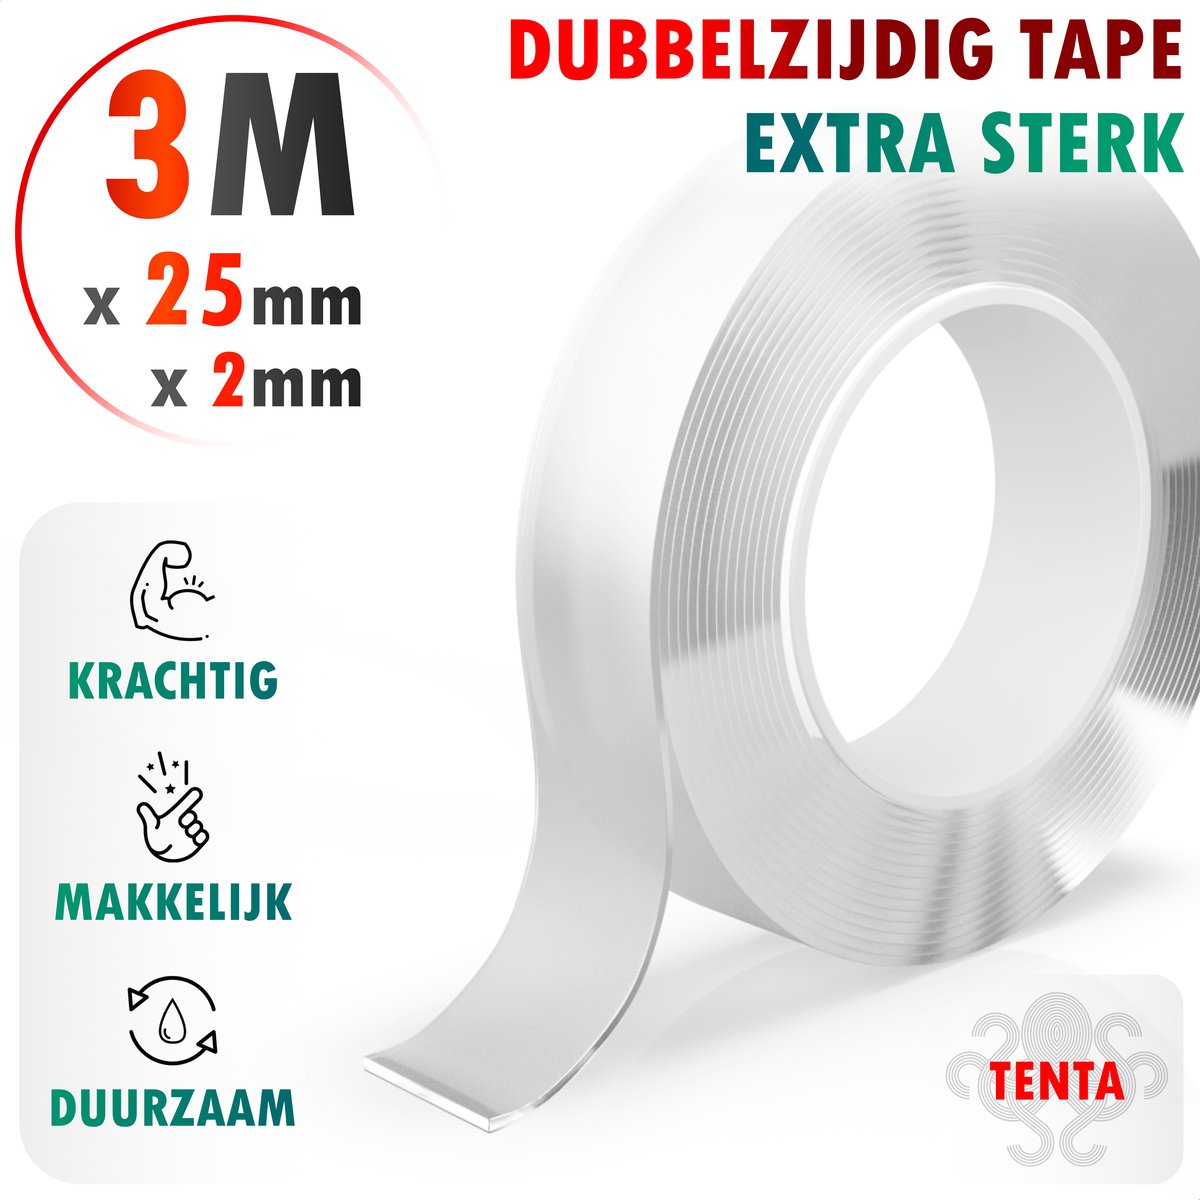 TENTA® Dubbelzijdig Tape Extra Sterk - 3m x 25mm x 2mm | bol